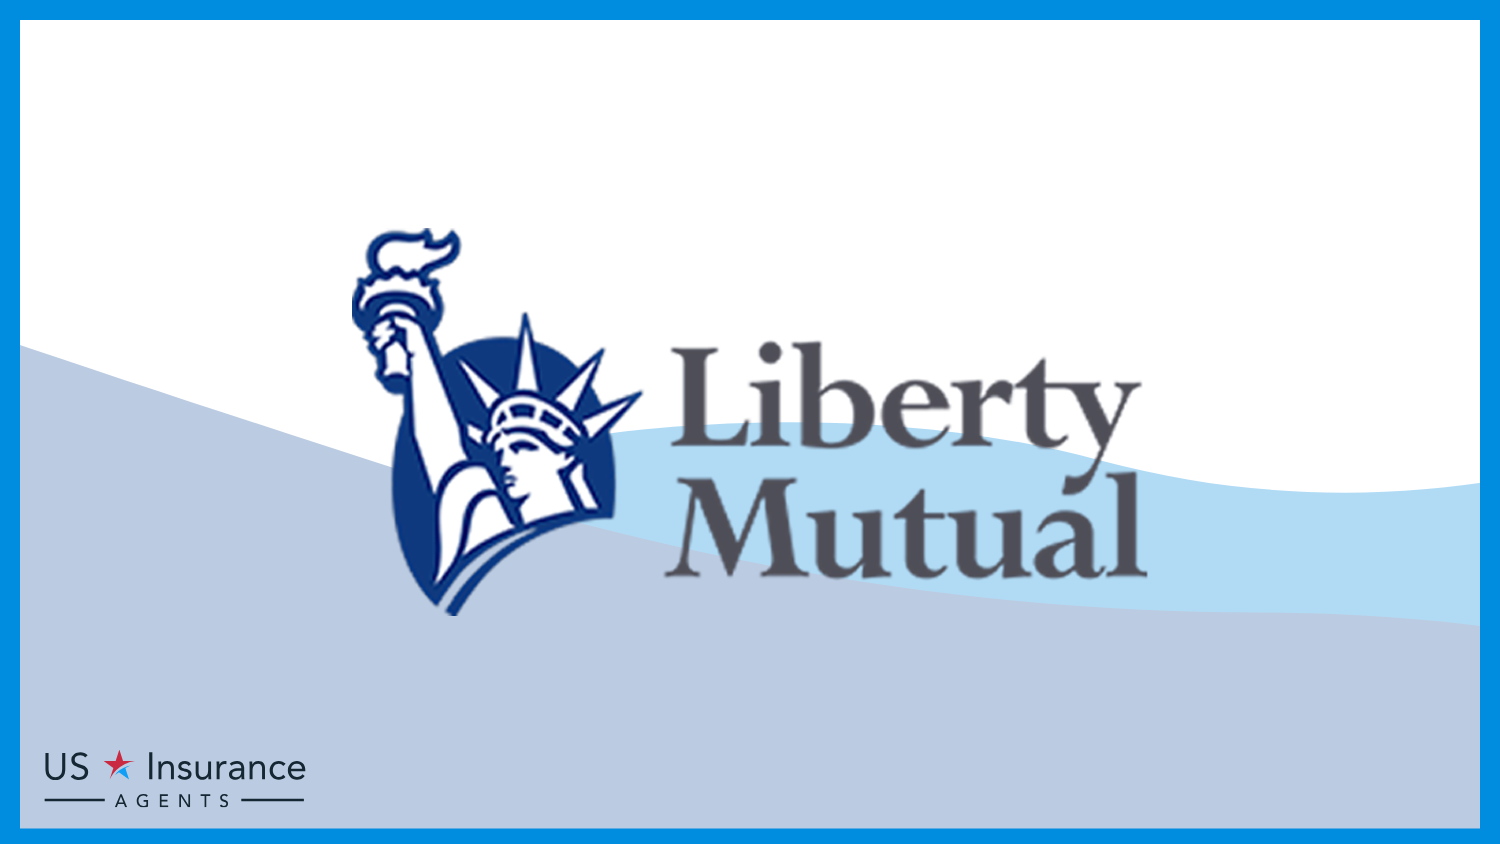 Liberty Mutual: Best Life Insurance for Veterans